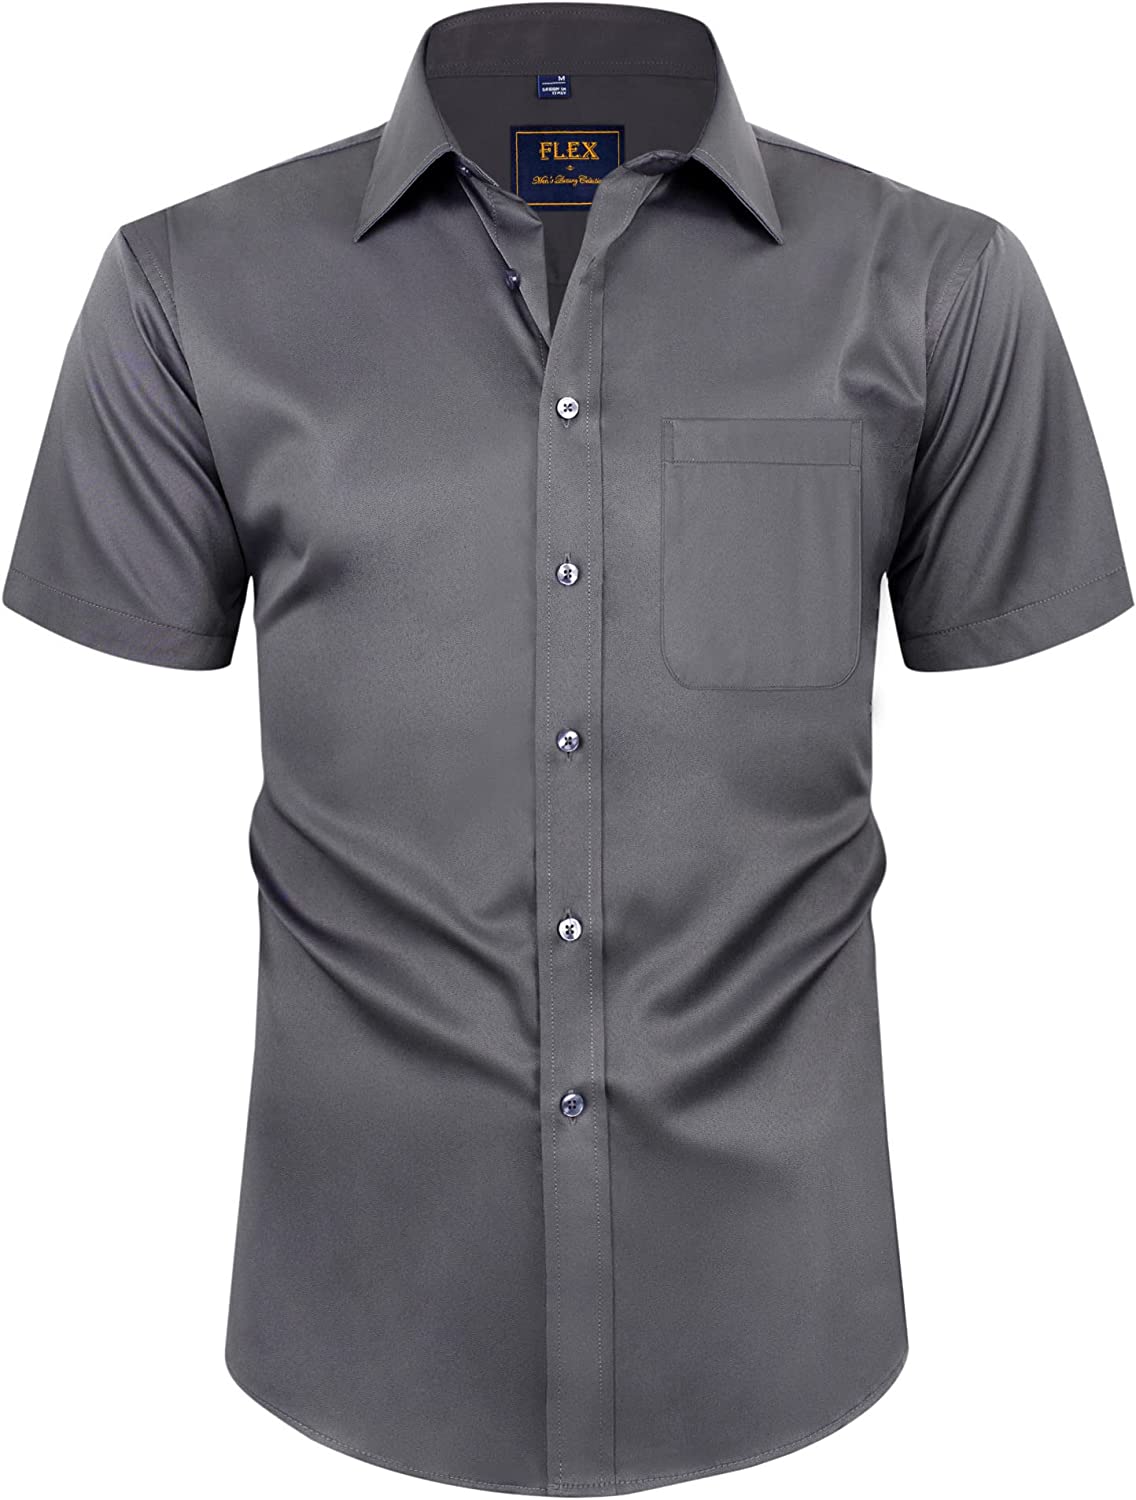 Alimens & Gentle Mens Short Sleeve Dress Shirts Wrinkle Free